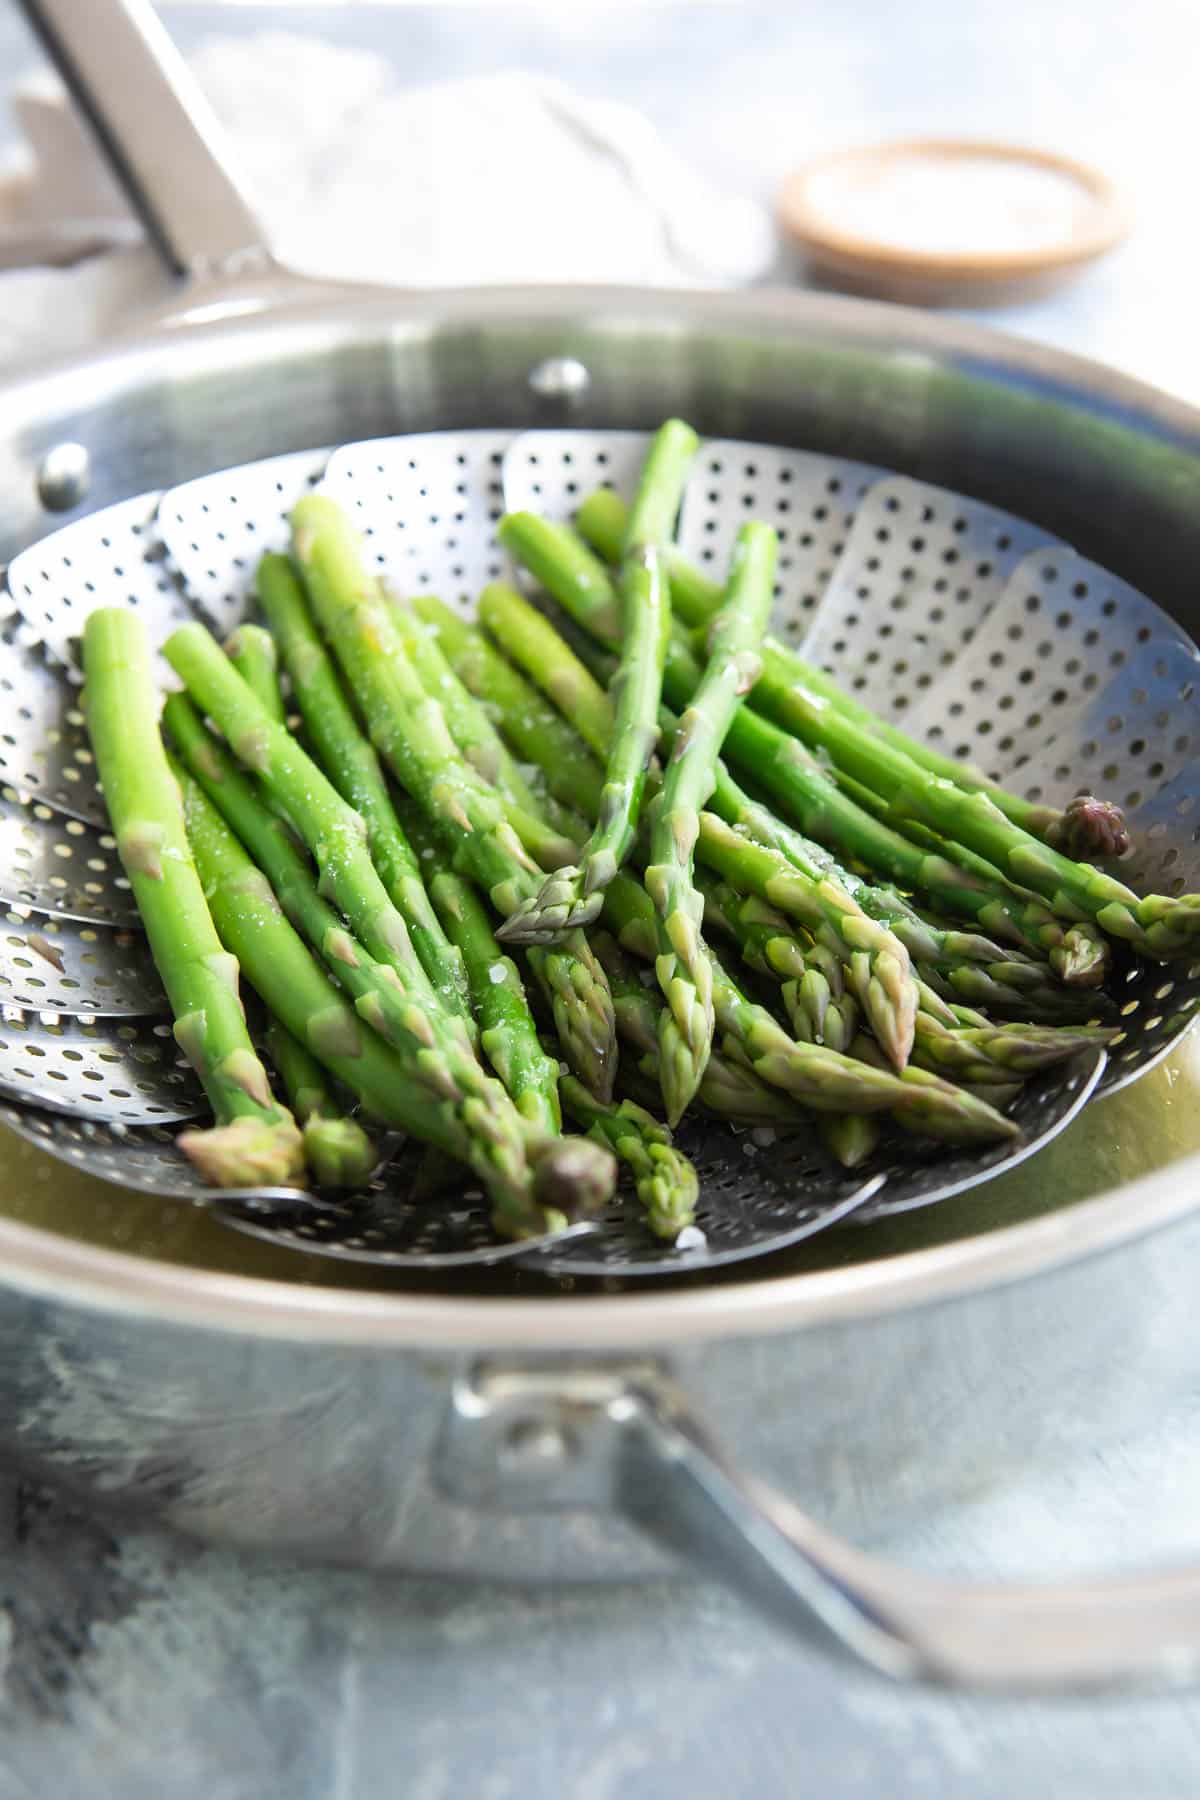 Steamed asparagus in a steamer basket.